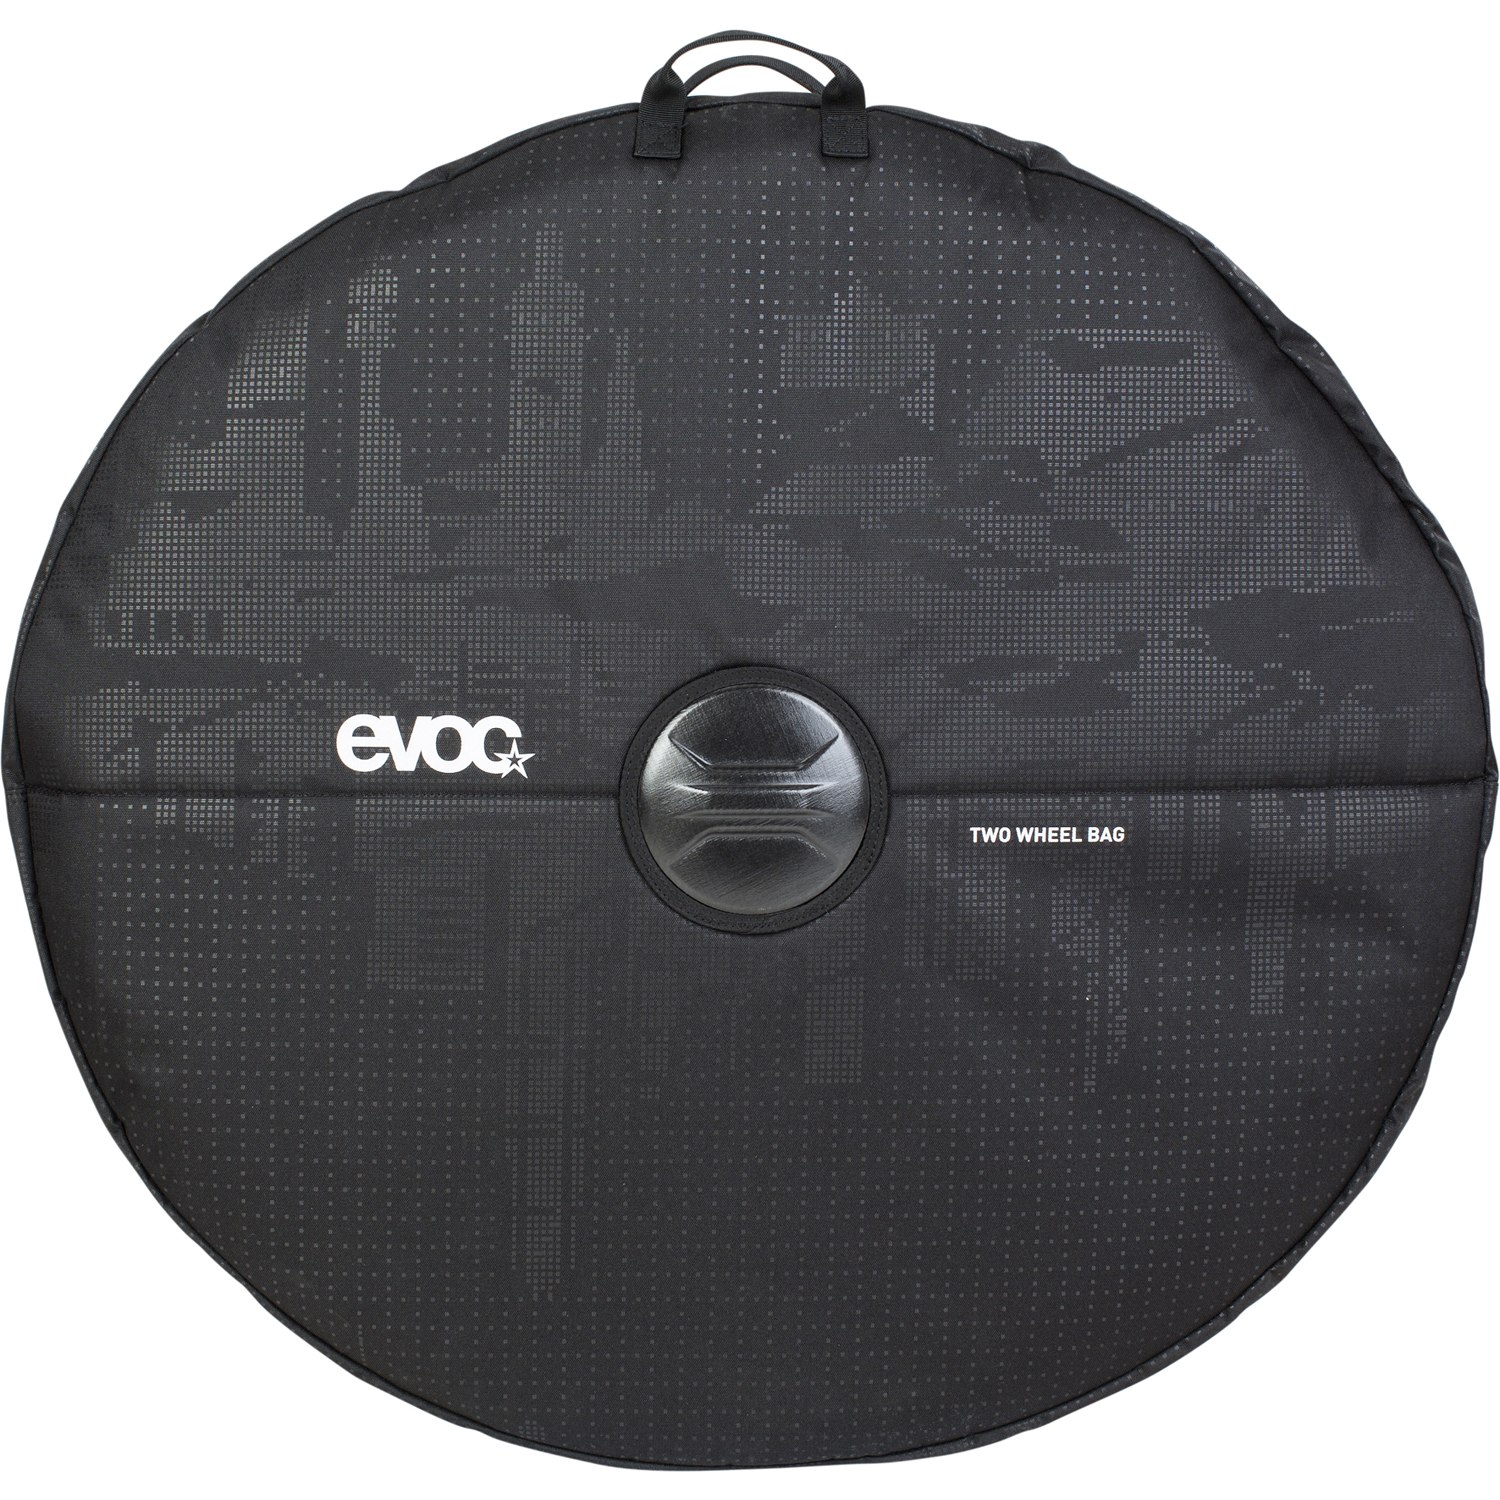 Productfoto van Evoc TWO WHEEL BAG - Black